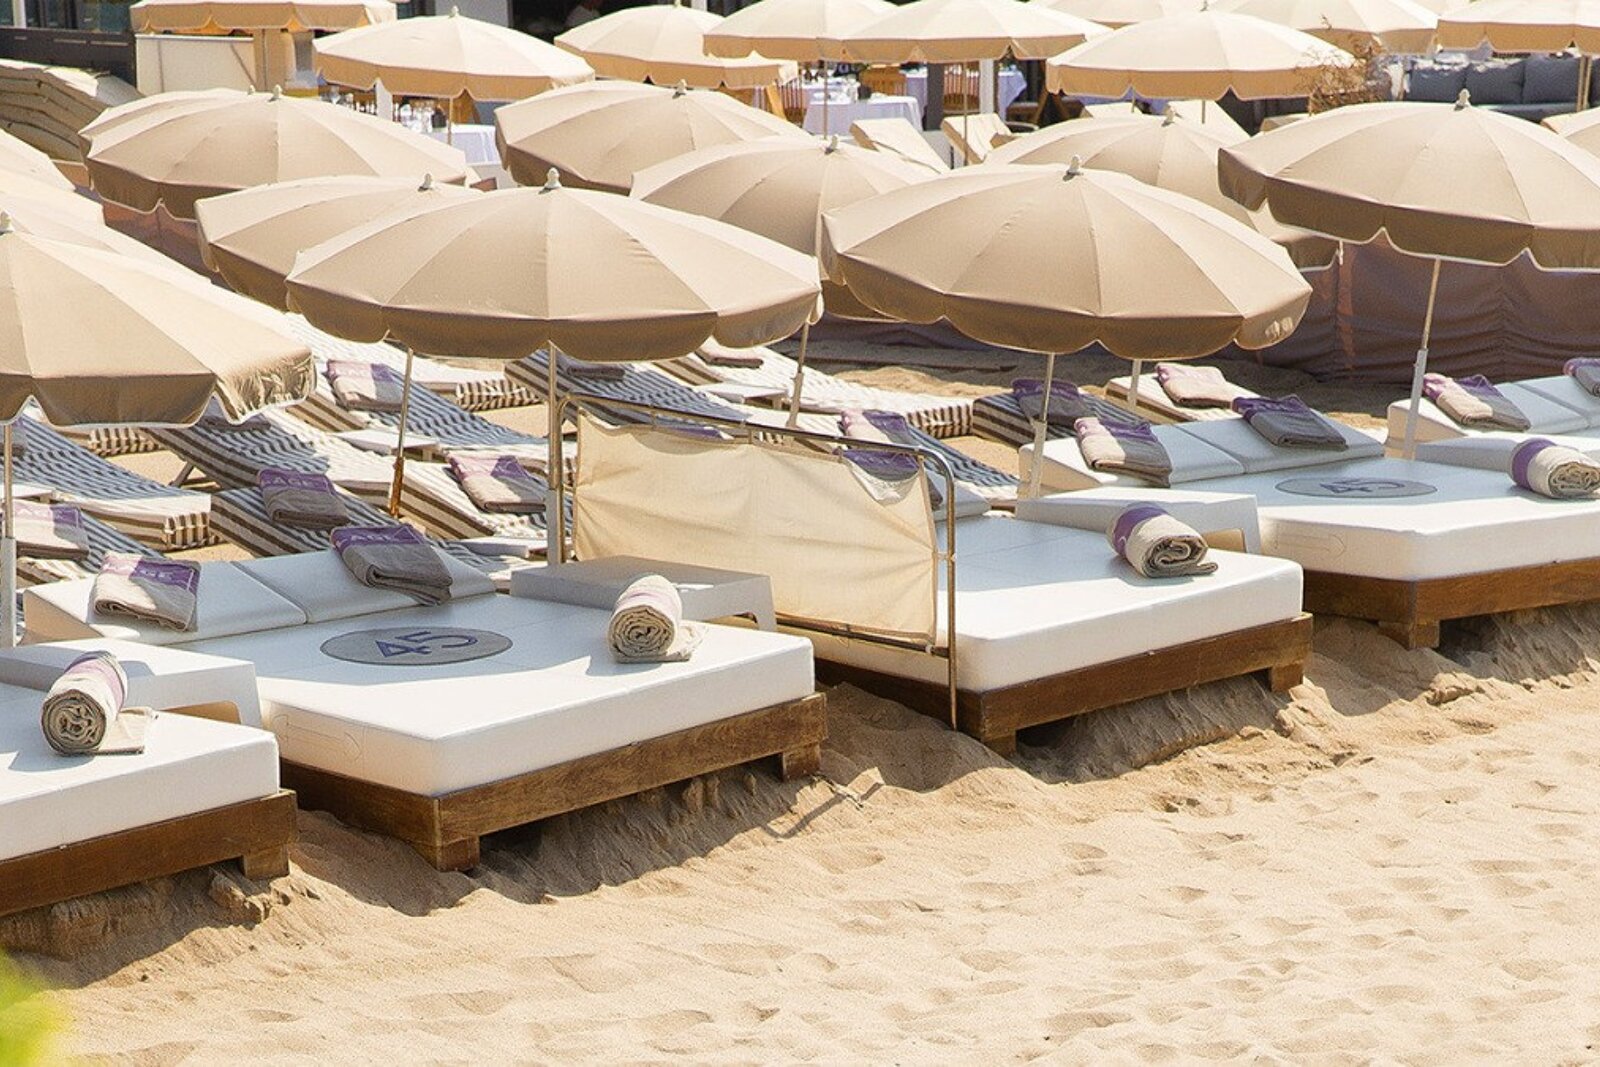 La Plage 45 Beach Club, Cannes